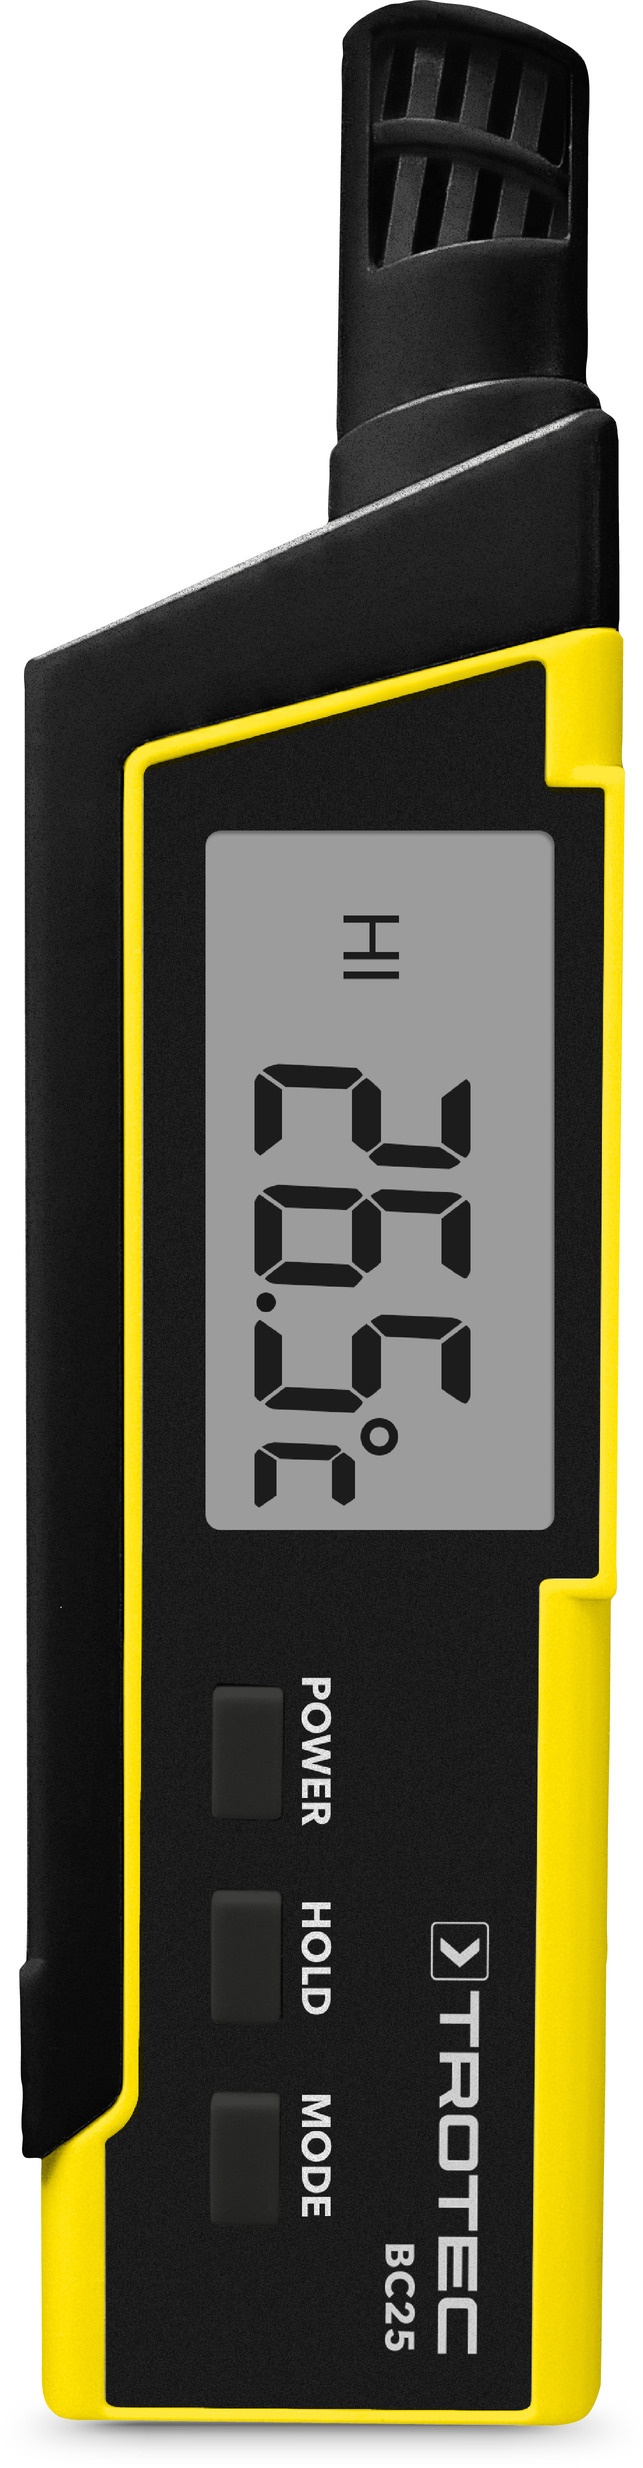 Trotec Thermohygrometer BC25 incl. hitte-index (HI) en gevoelstemperatuur (WGBT) indicator